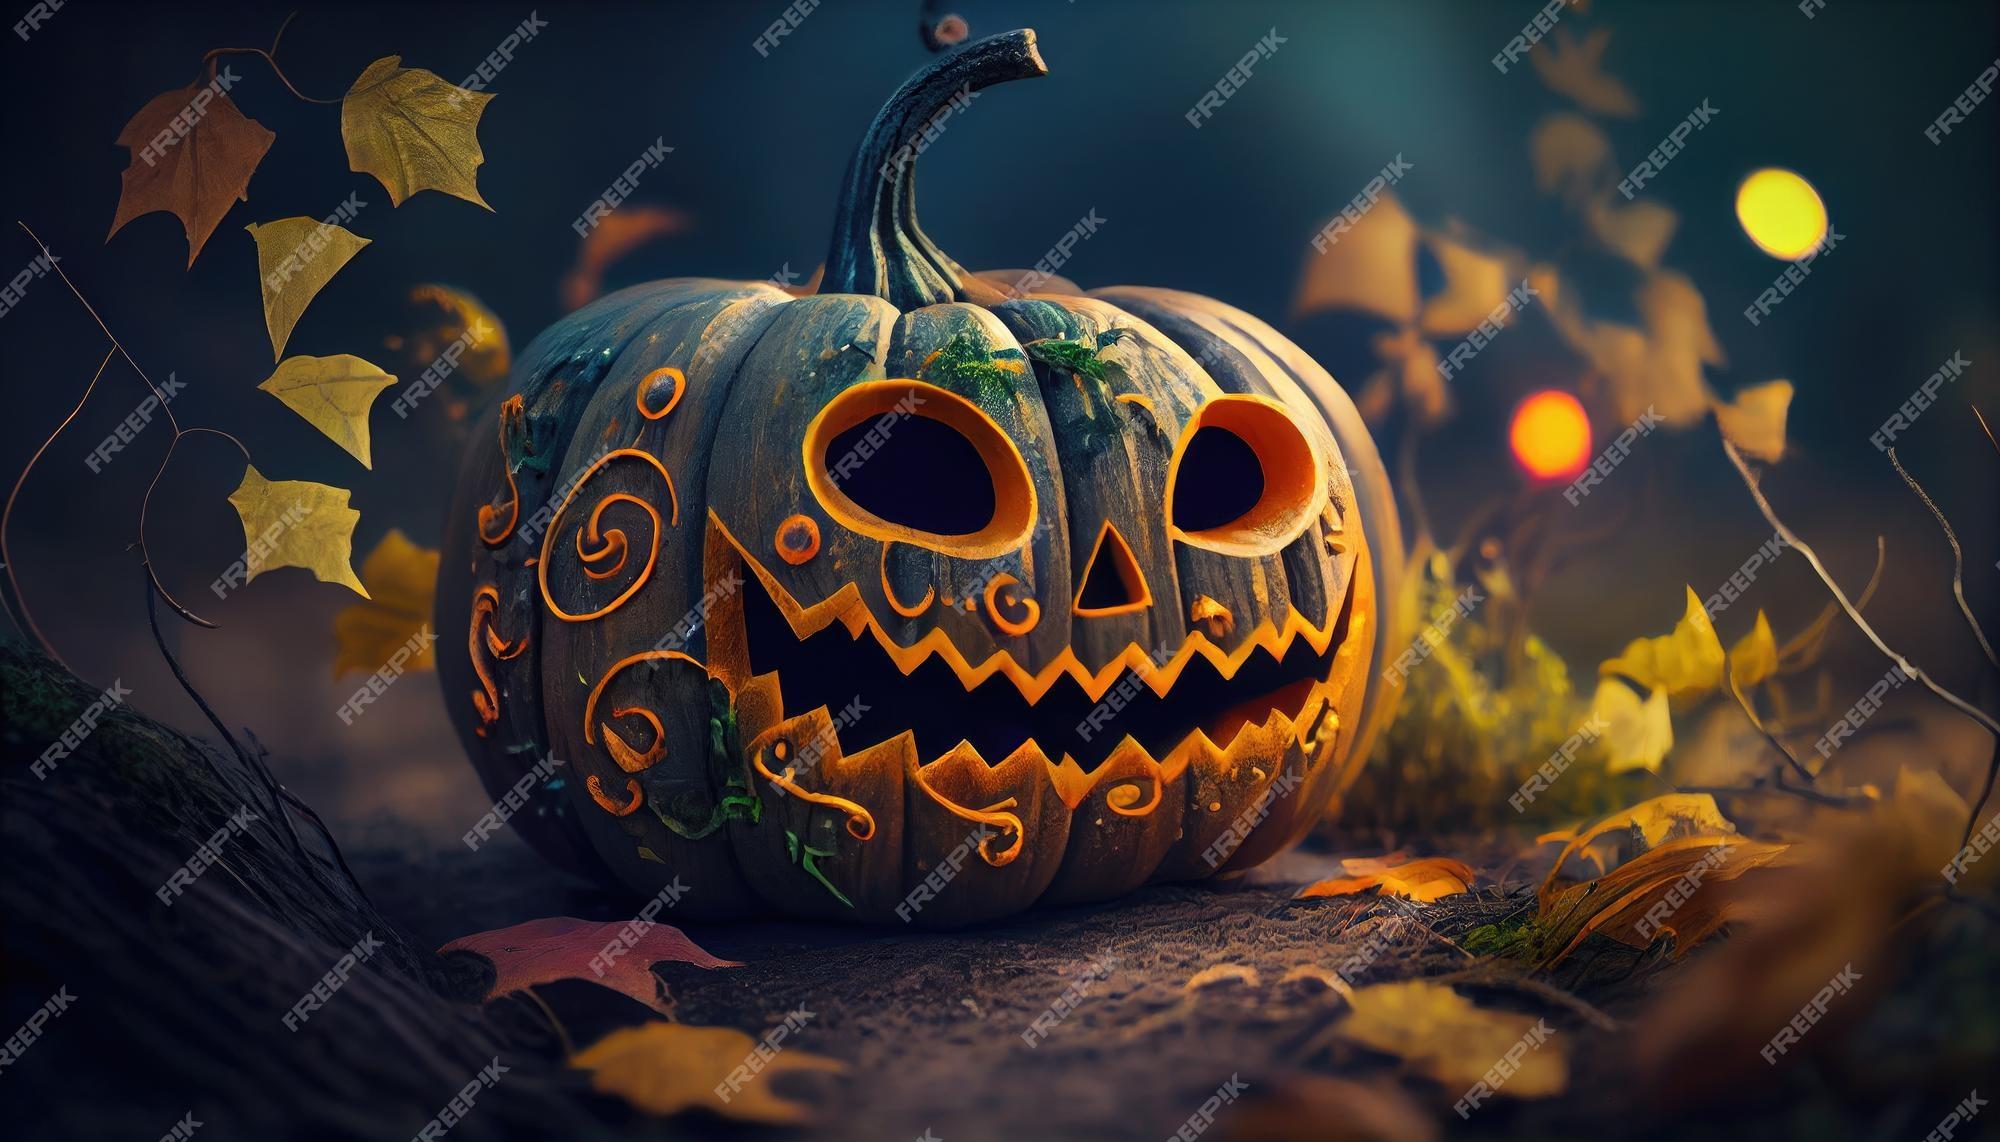 Premium Photo A halloween pumpkin